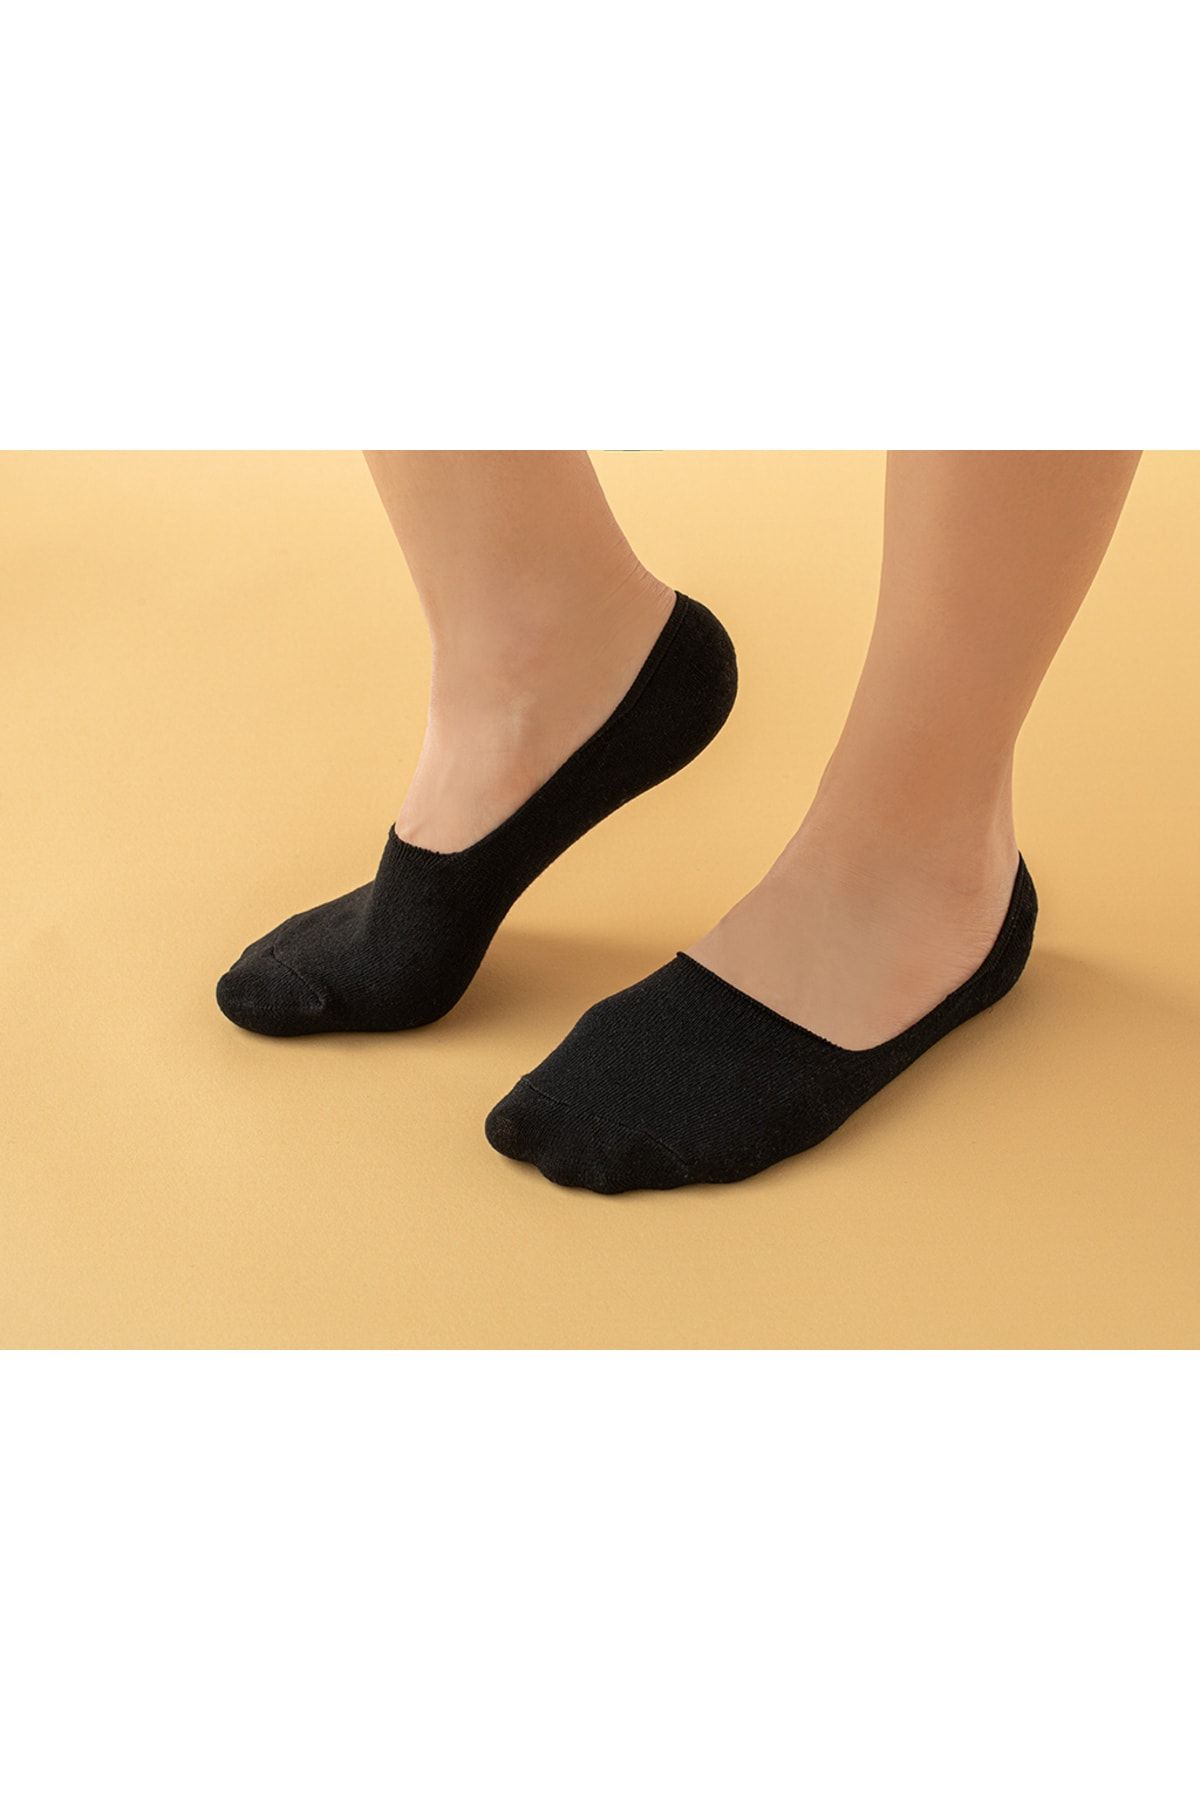 English Home Tarvel Pamuk Kadın Üçlü Babet Çorap 36-40 Siyah